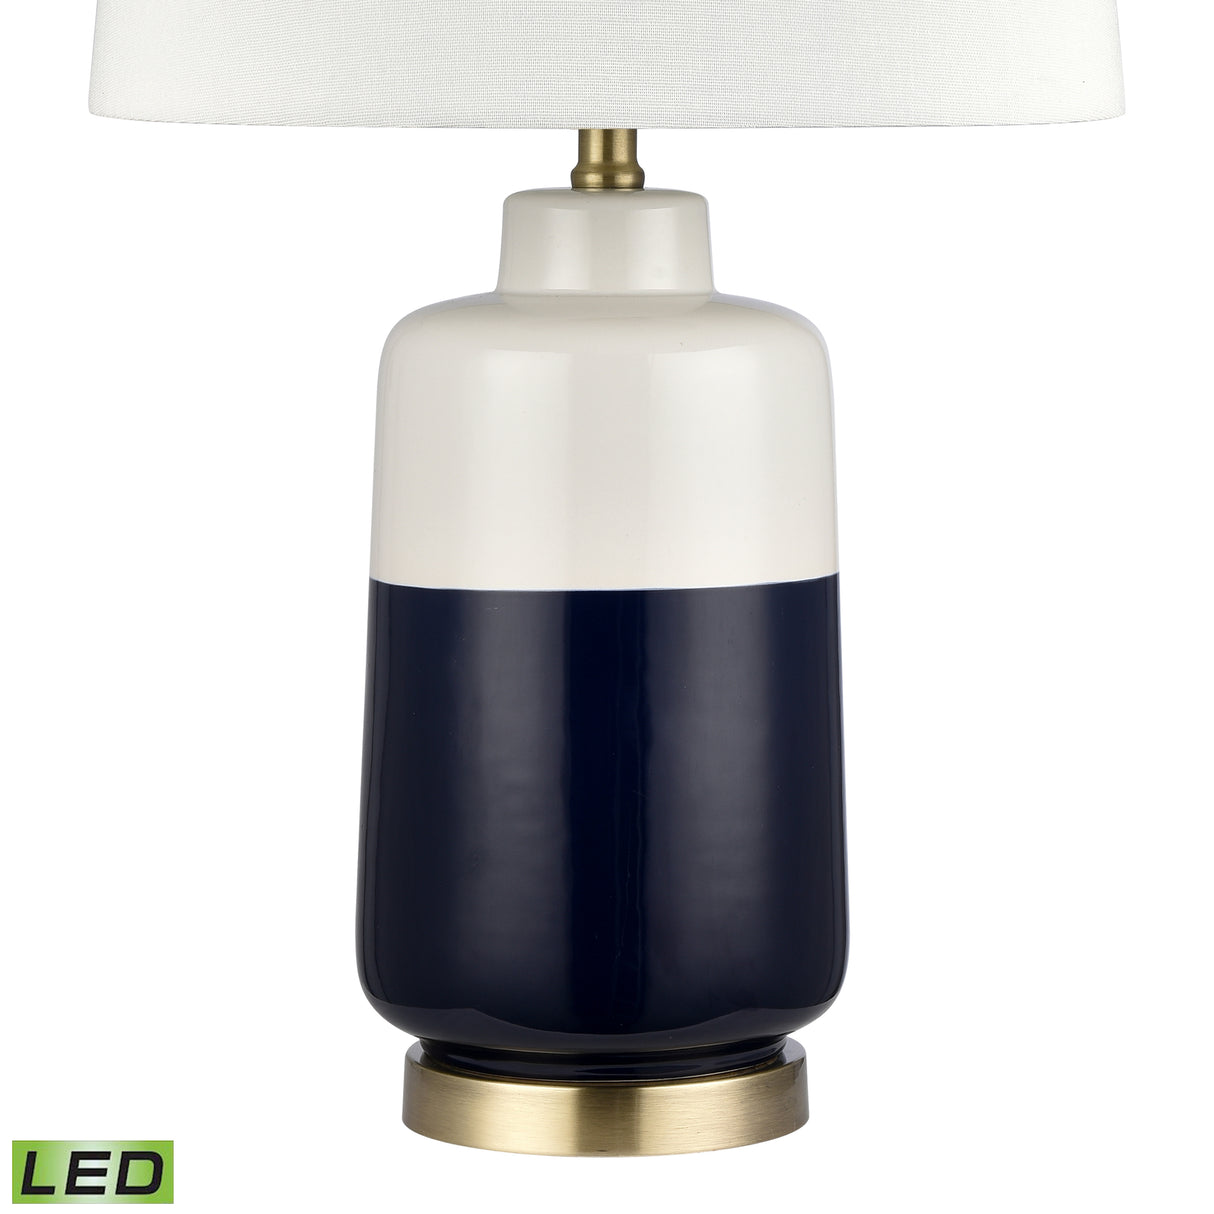 Elk S0019-9490-LED Shotton 27'' High 1-Light Table Lamp - Navy - Includes LED Bulb